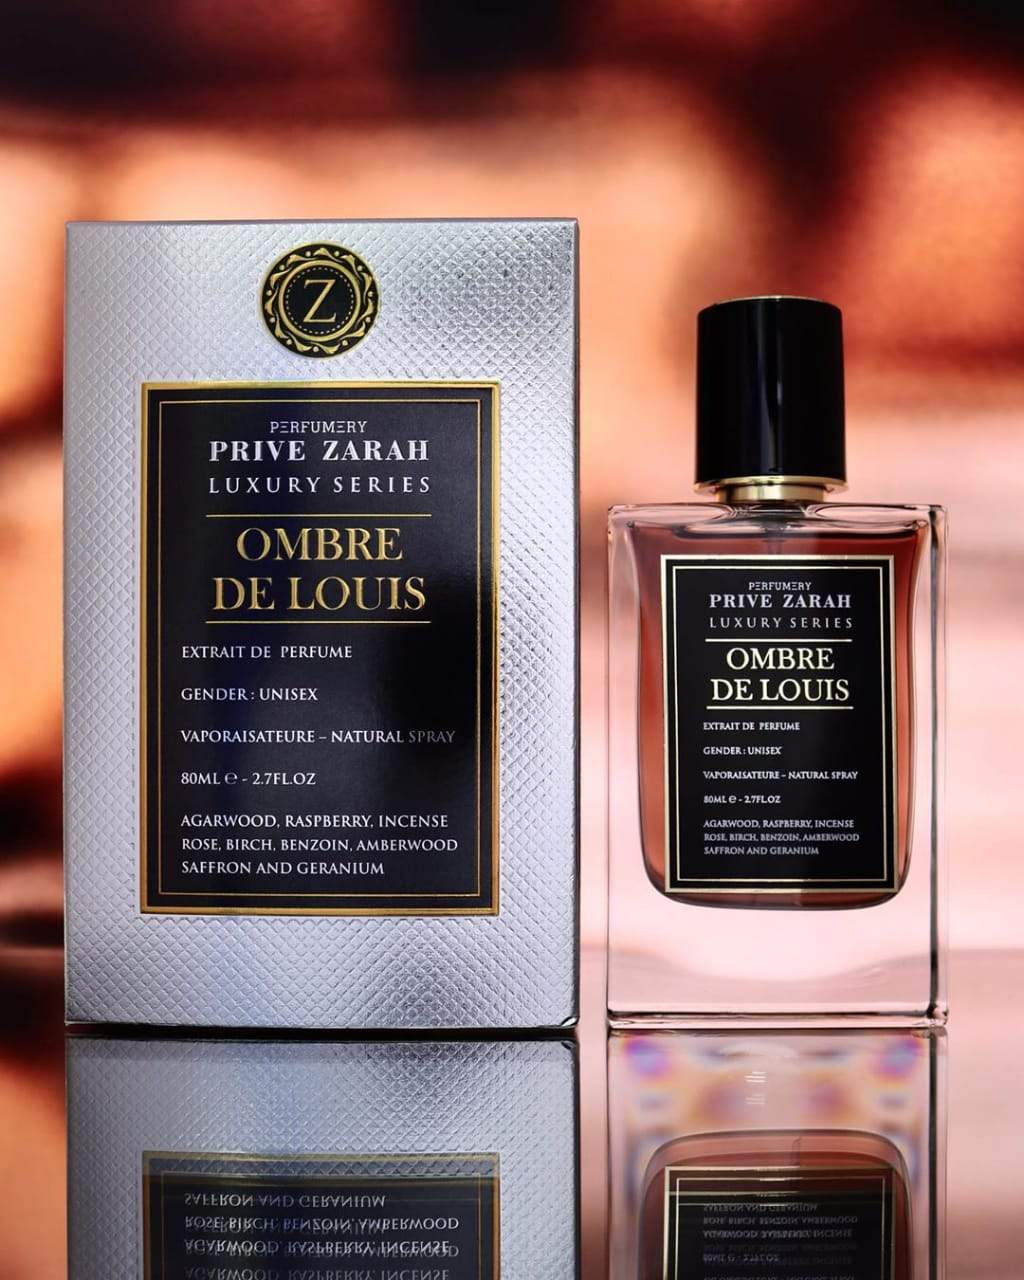 OMBRE DE LOUIS PRIVEZARAH Perfume